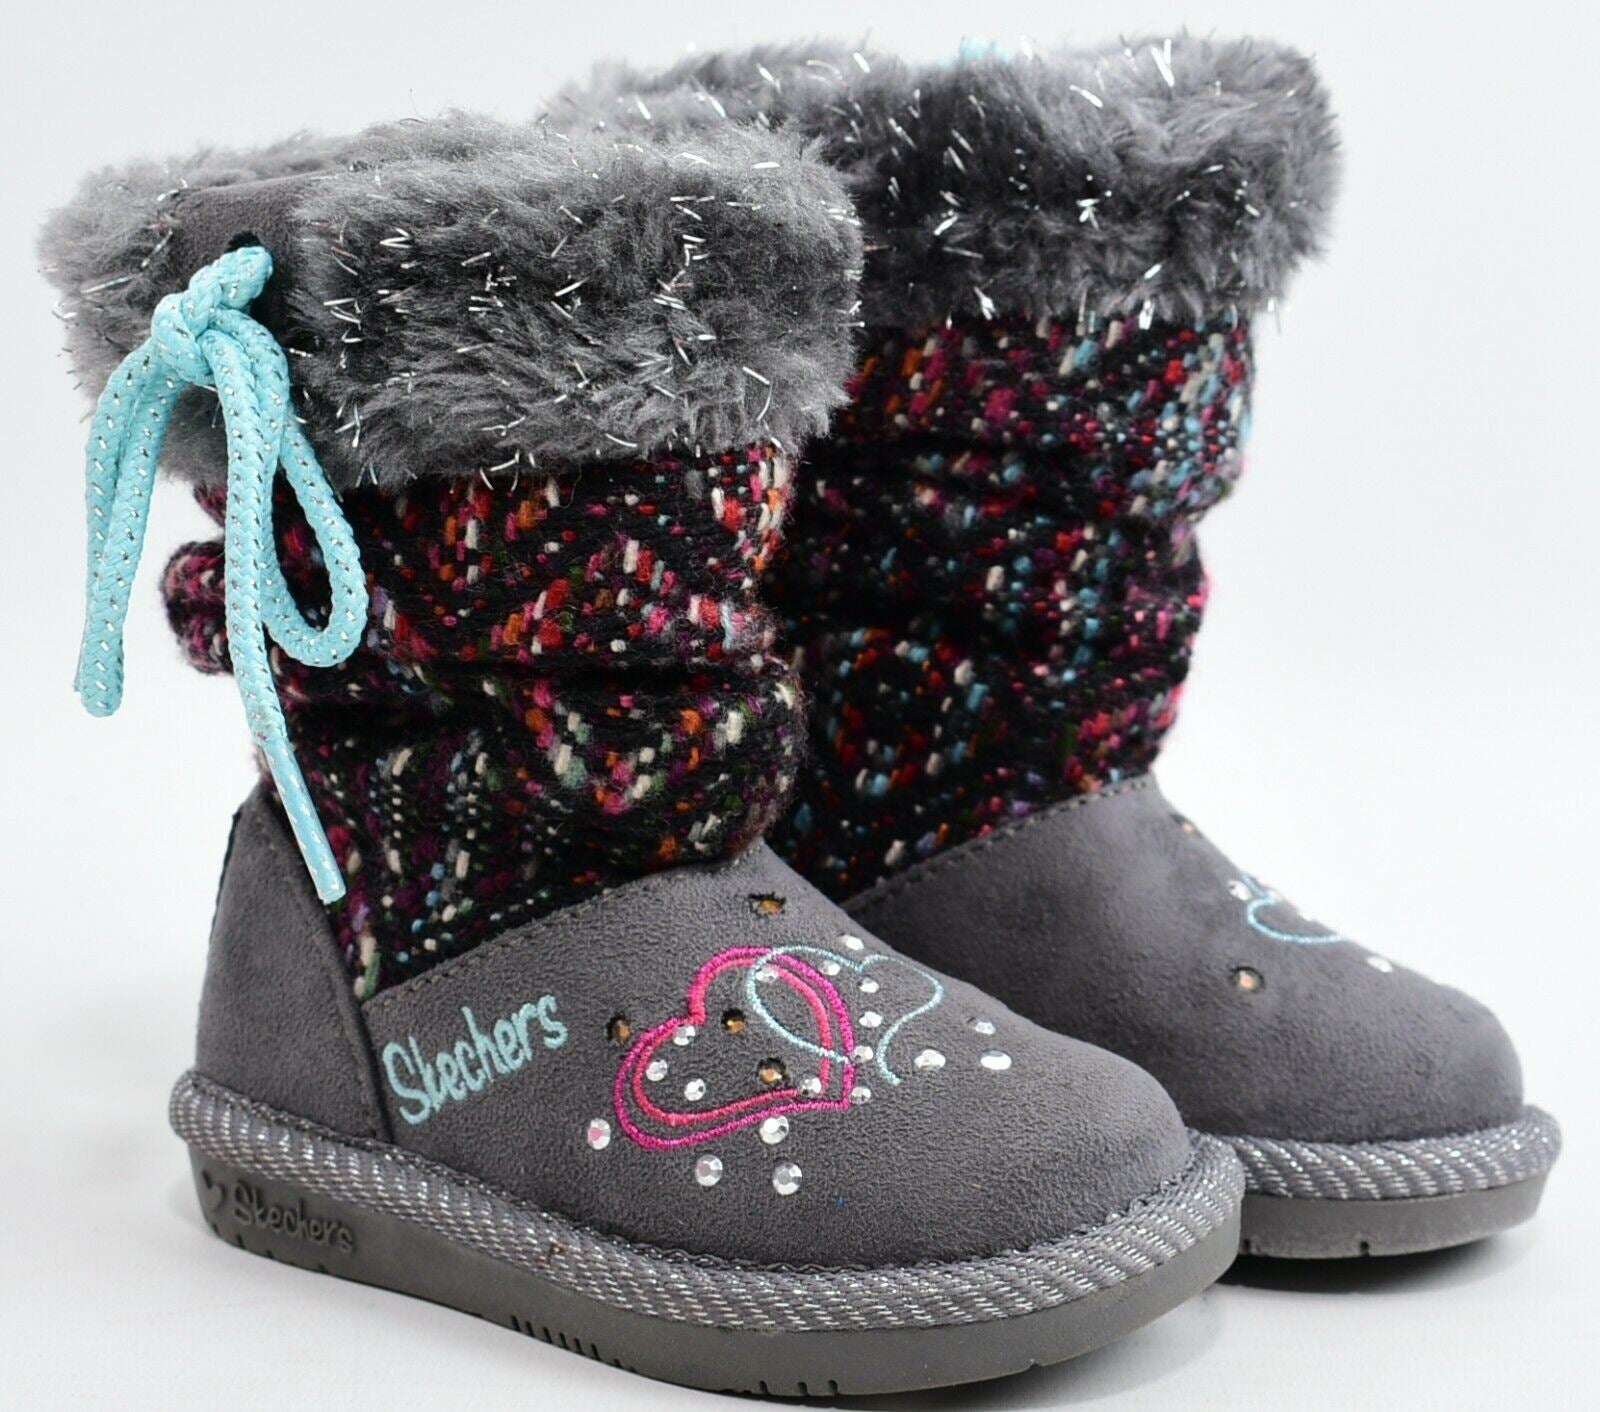 SKECHERS Twinkle Toes Girls' Light Up Boots, Grey/Multi, infant UK 4 / EU 21